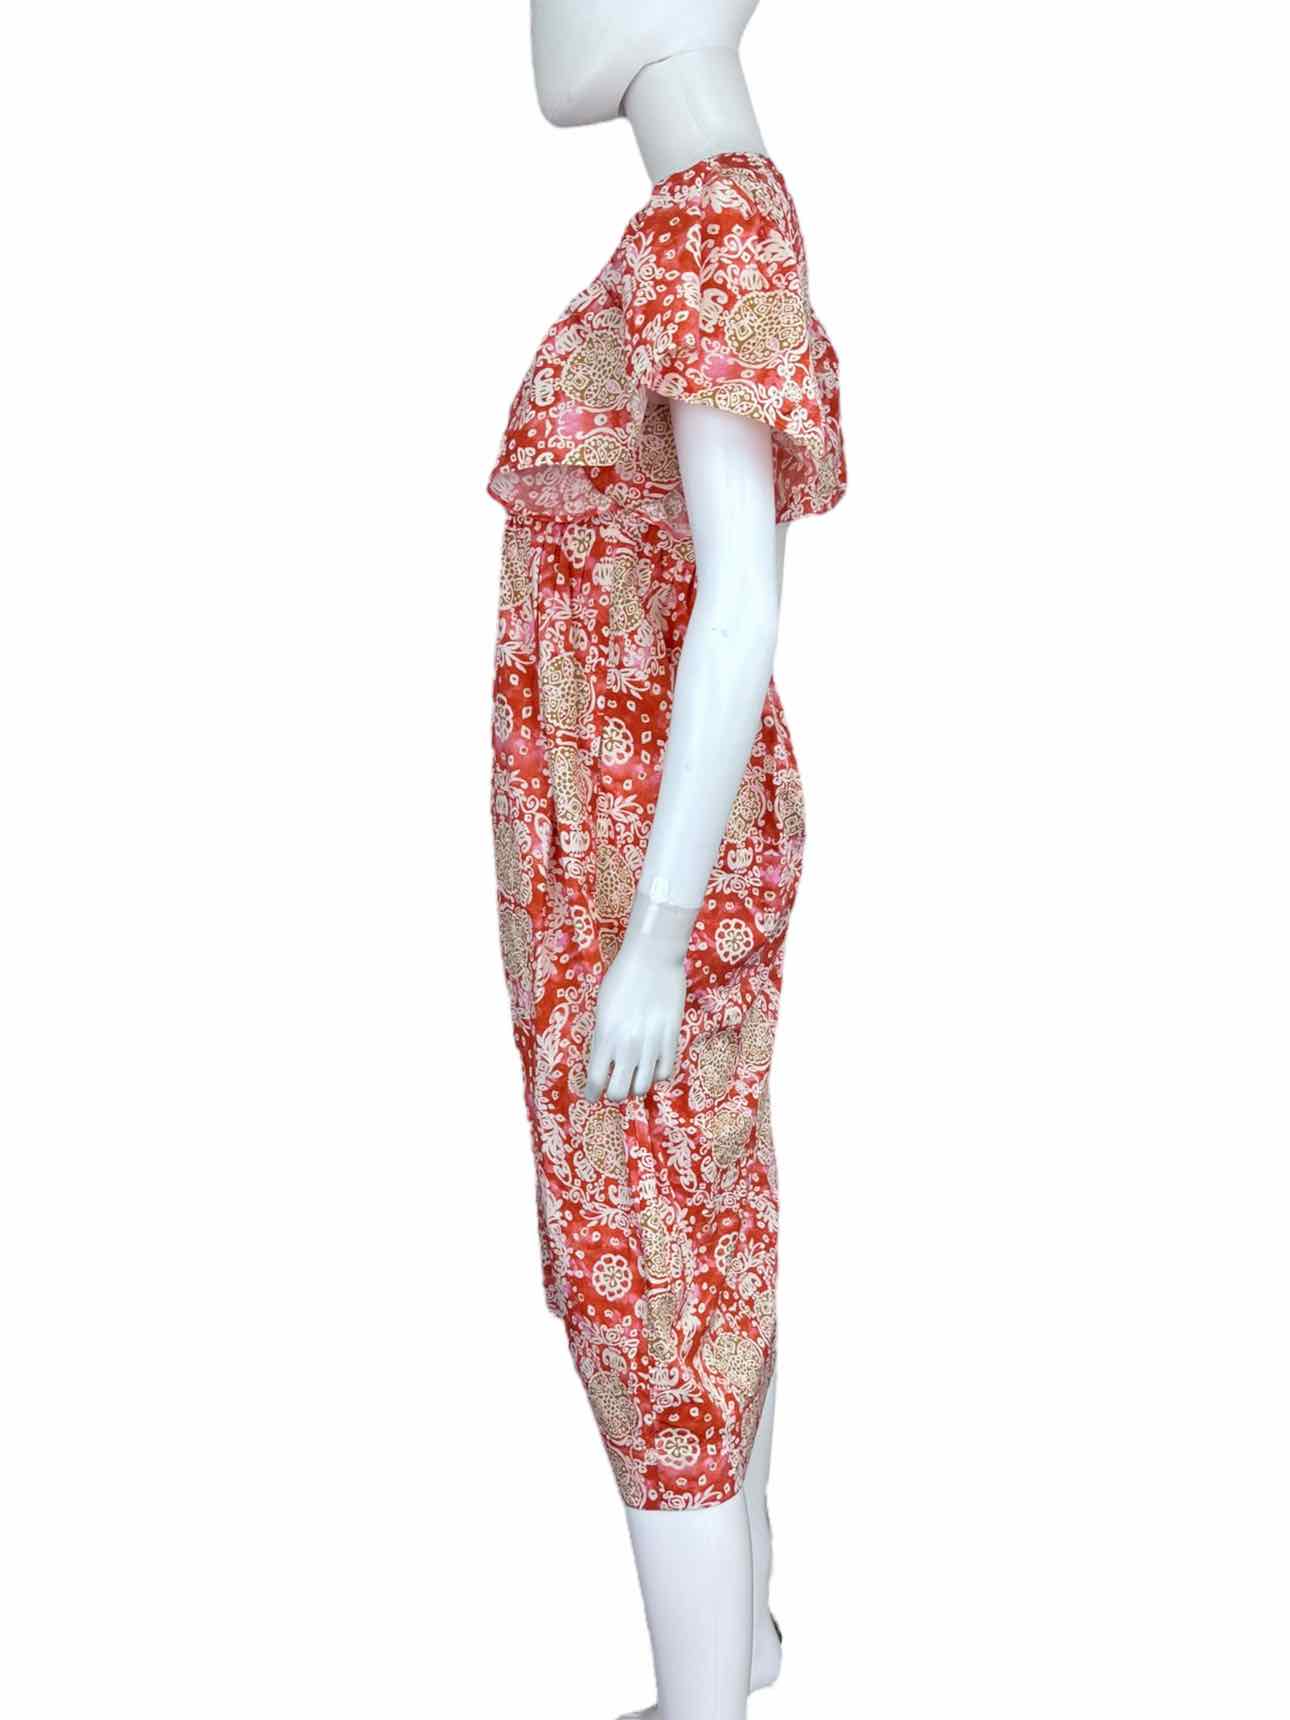 maeve Tan Paisley Print Dress Size XS